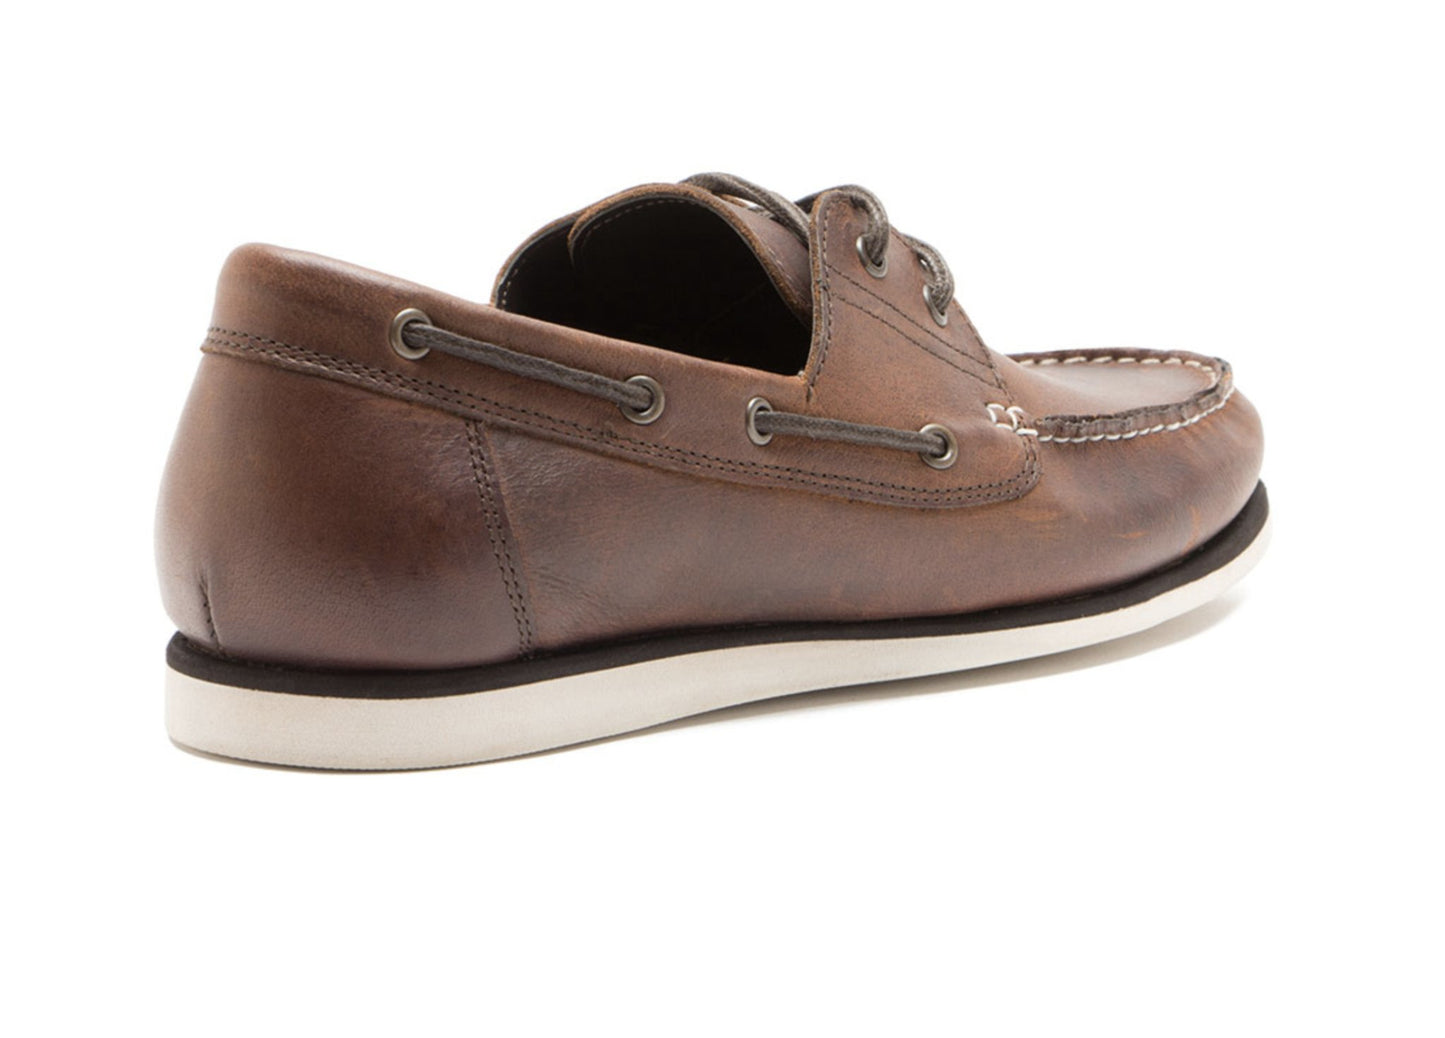 Men's Leather Boat Shoes Brown - Helf - GLS Clothing